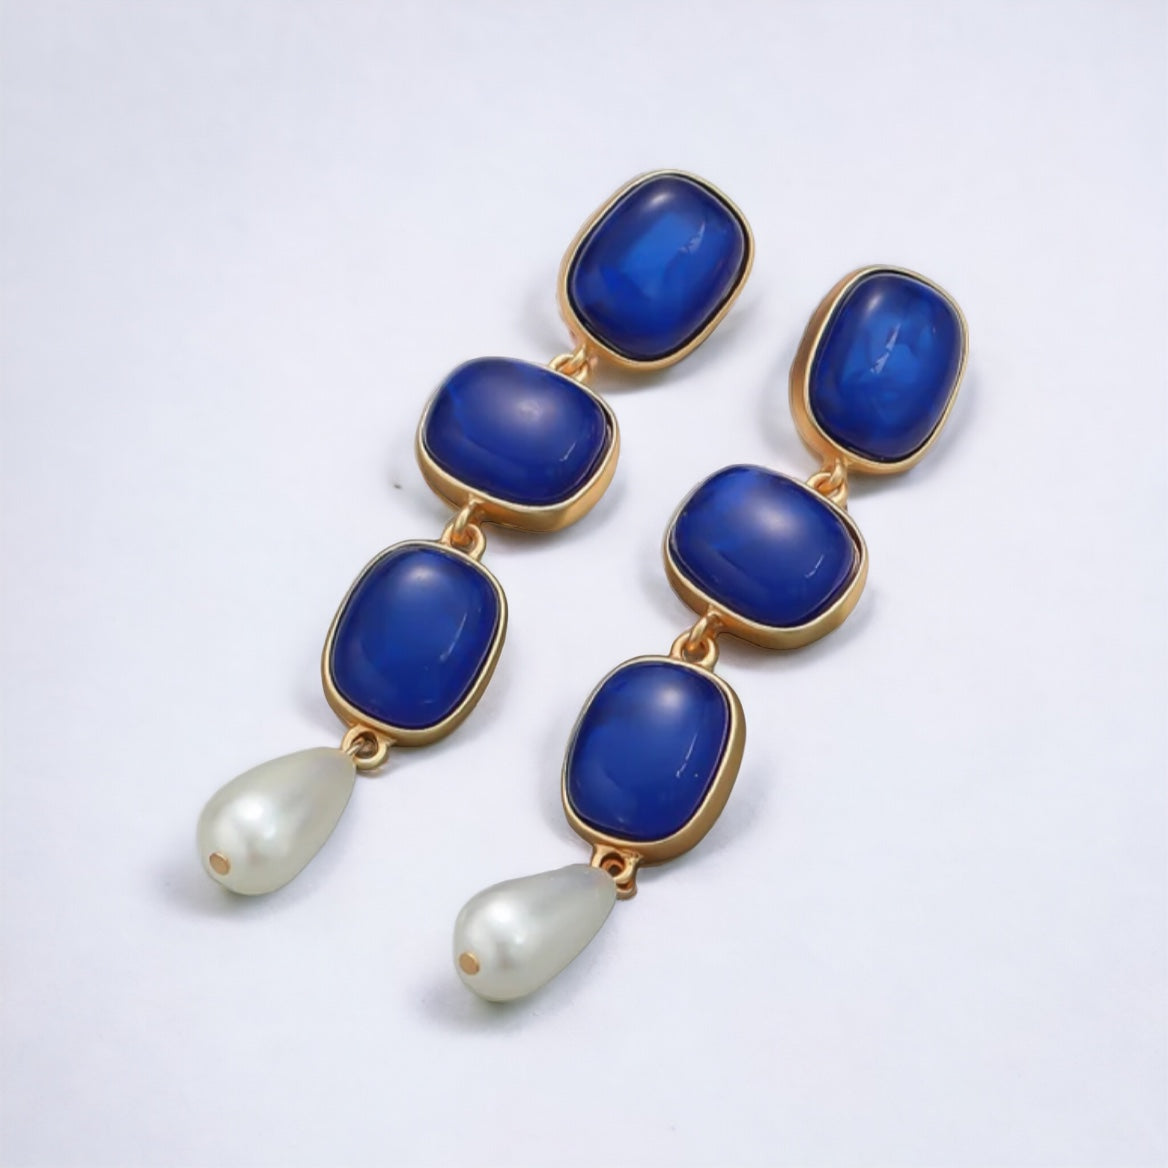 Blue enamel earrings dangler